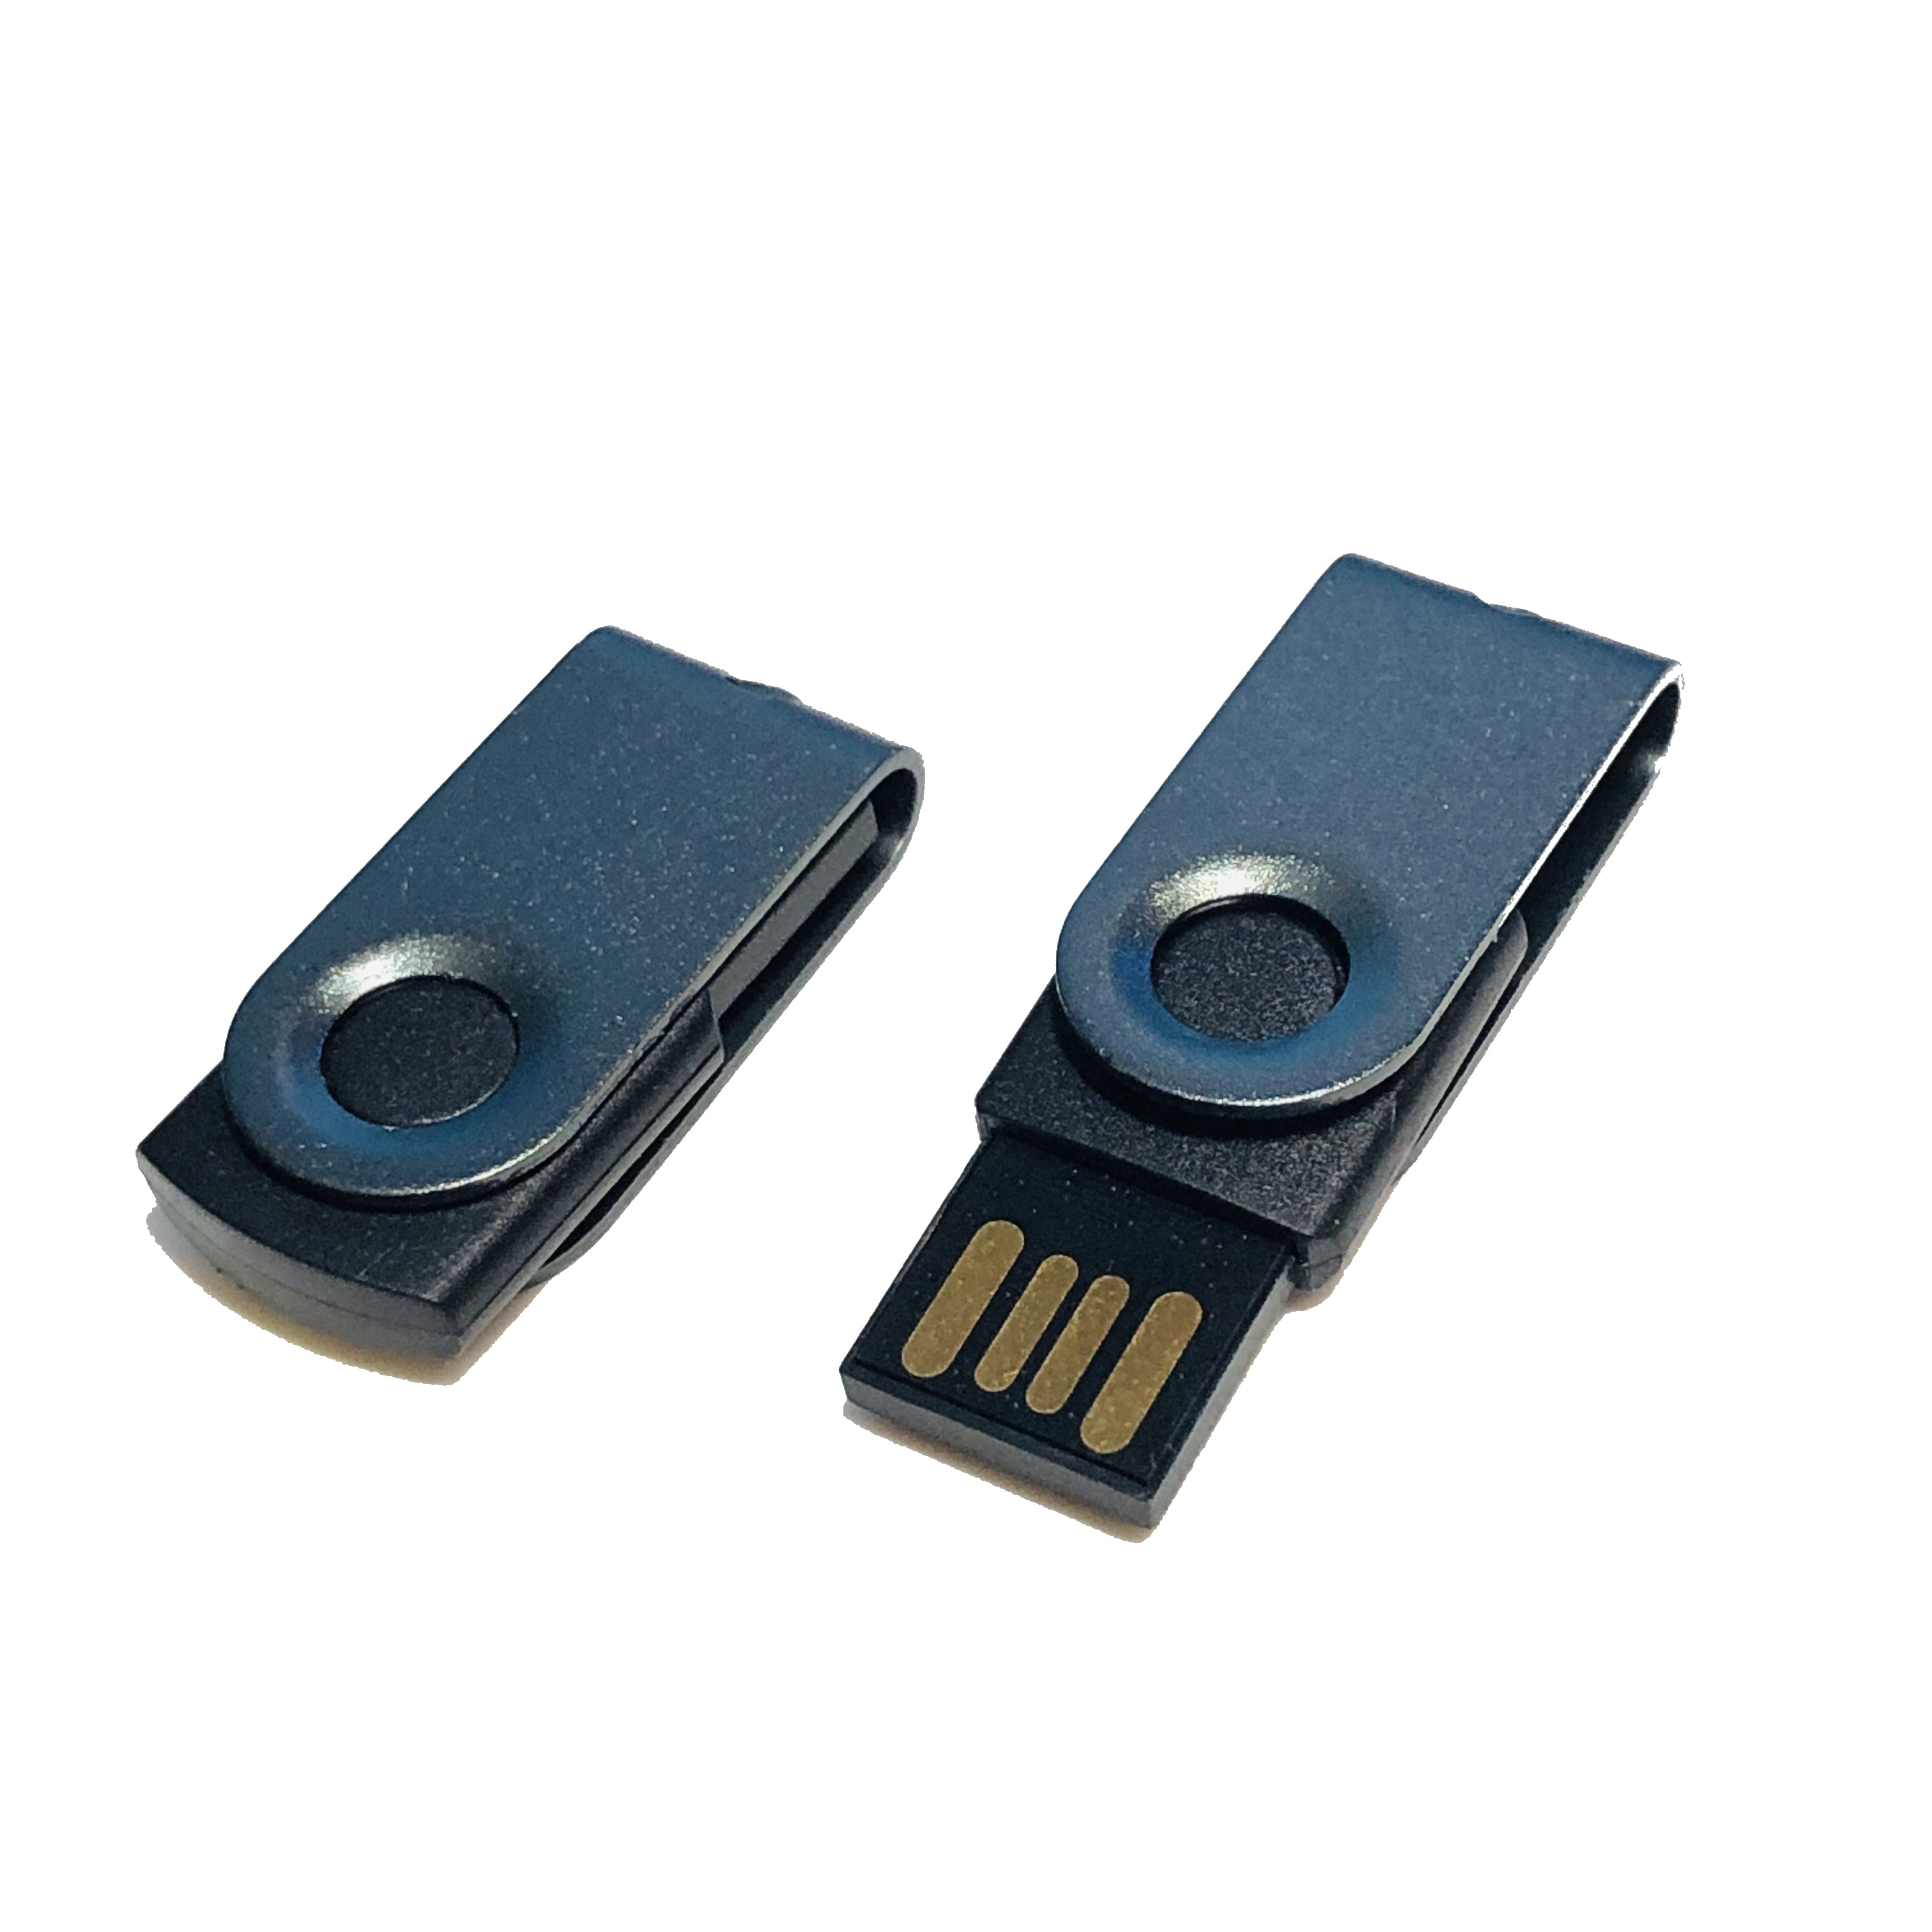 ® USB GB) 64 (Schwarz-Graumetall, MINI-SWIVEL USB-Stick GERMANY